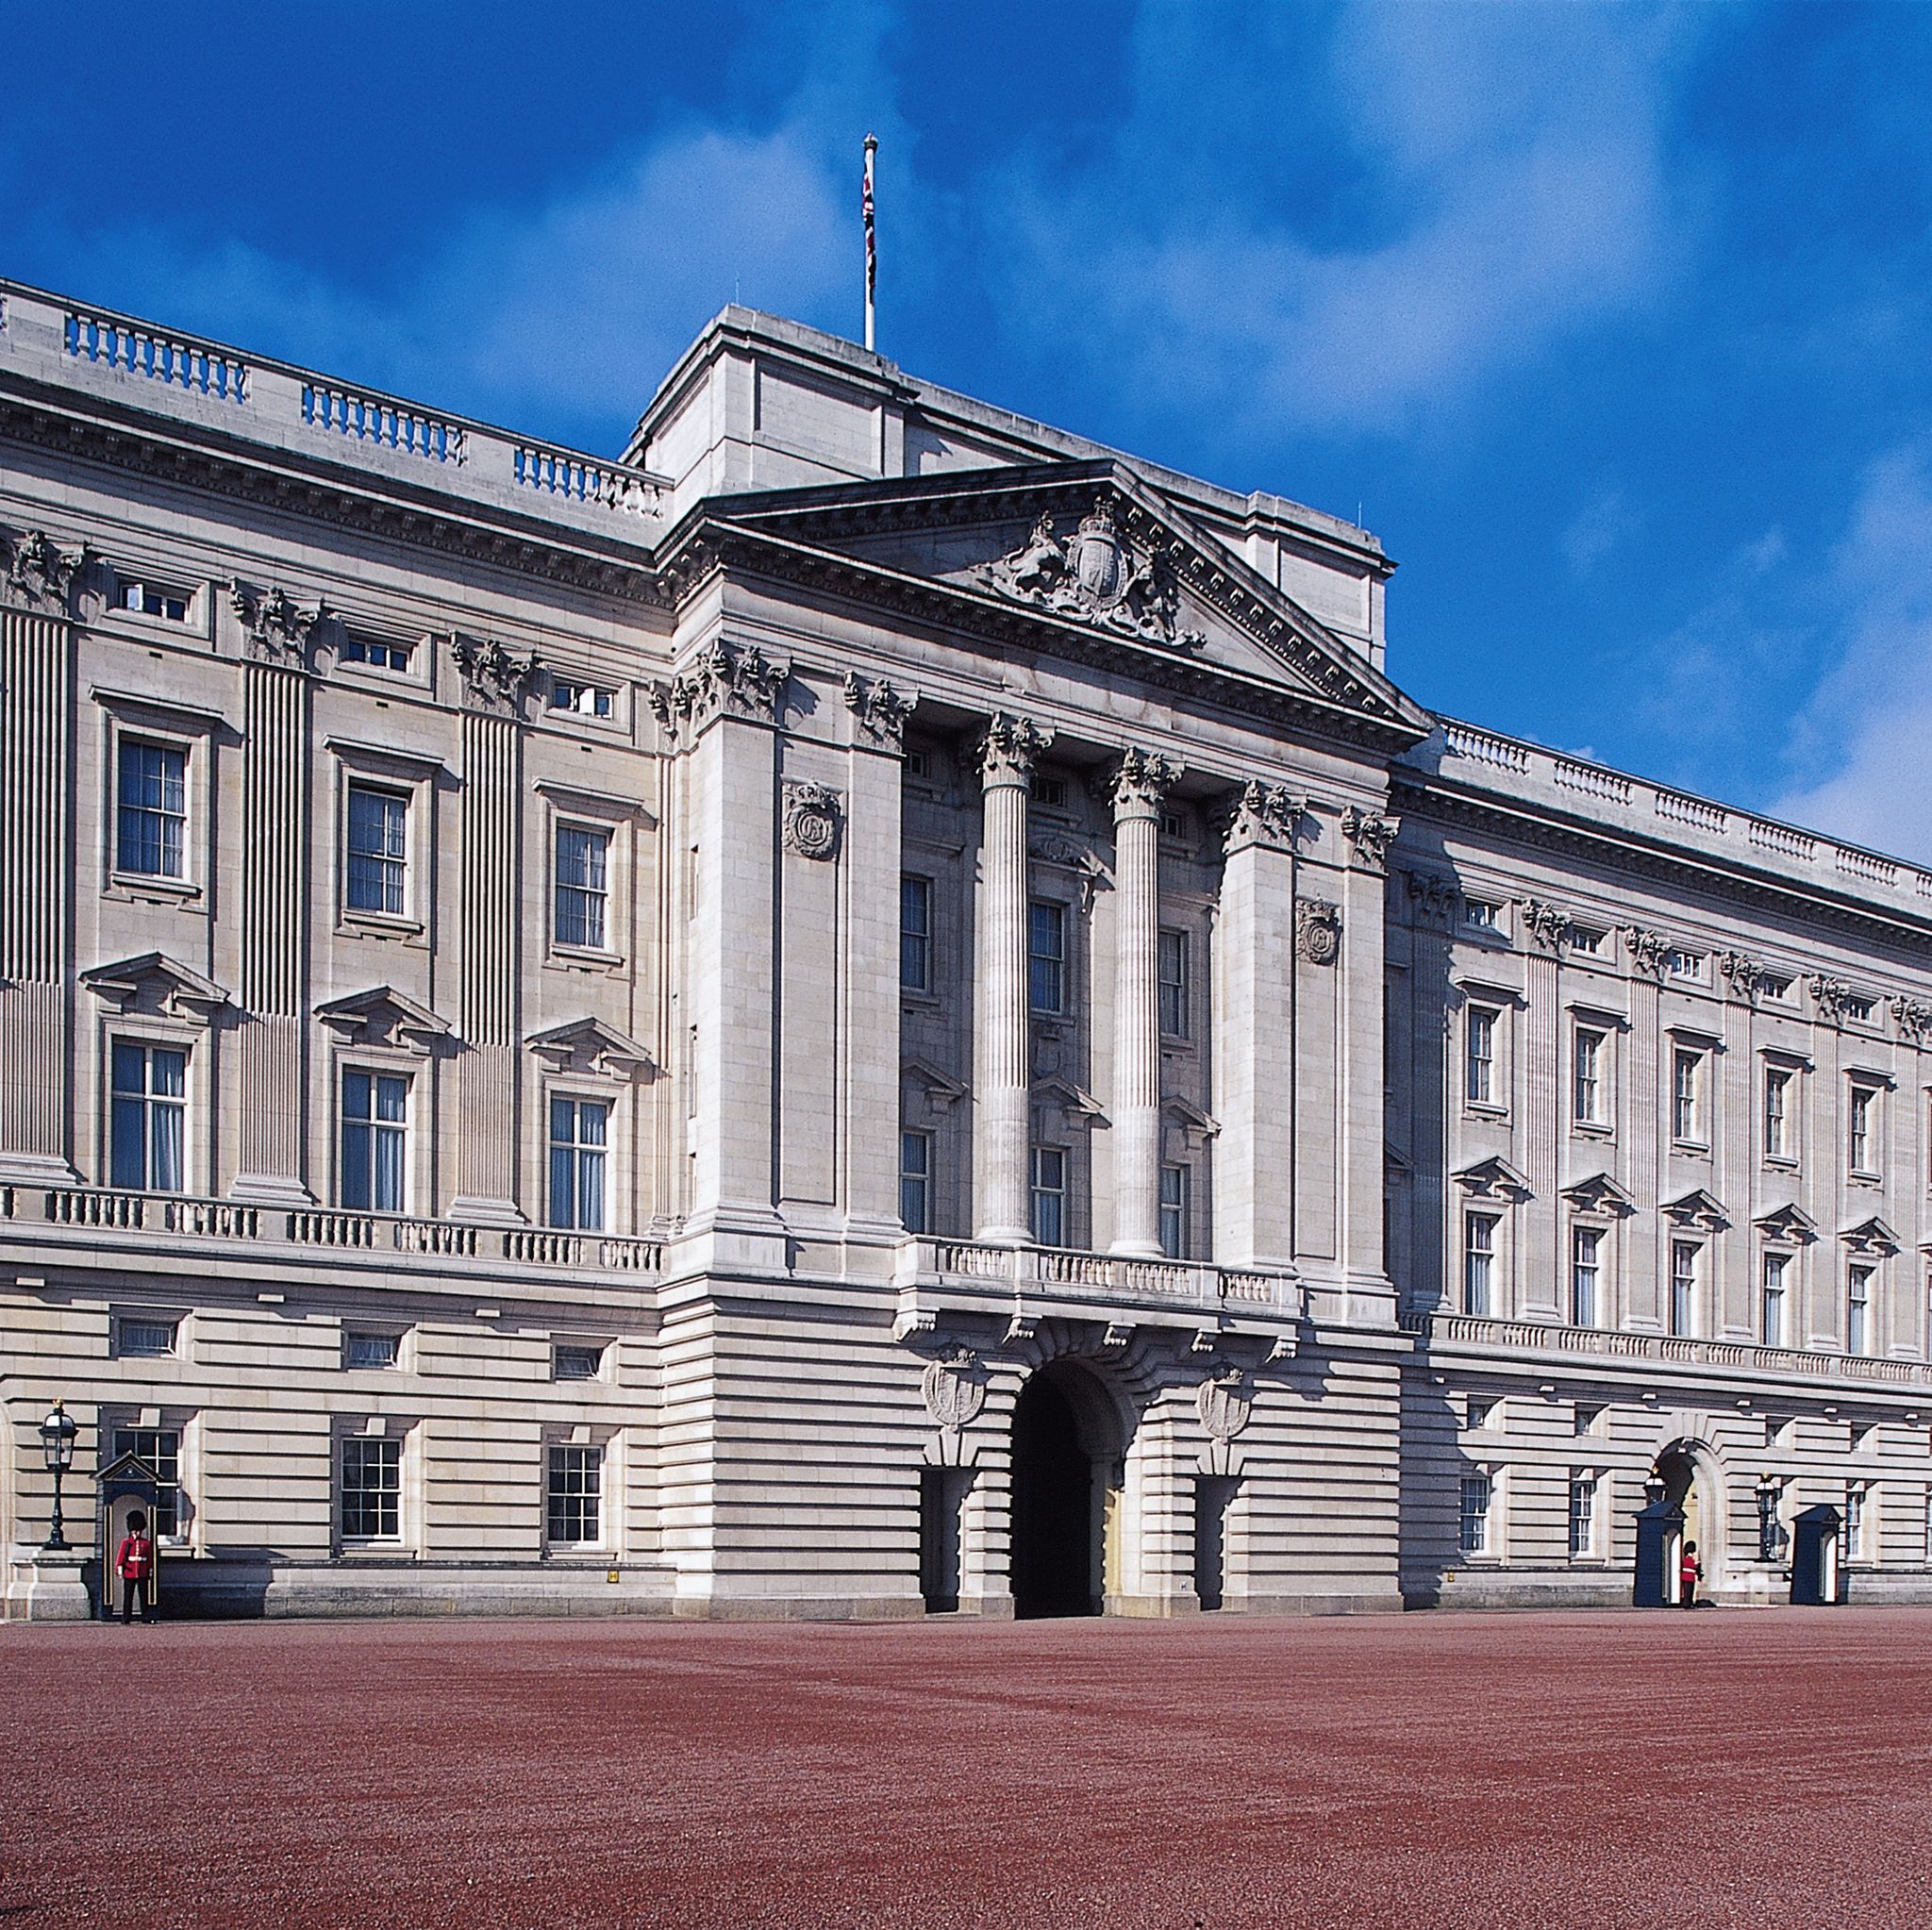 Facade of Buckingham Palace, London, England